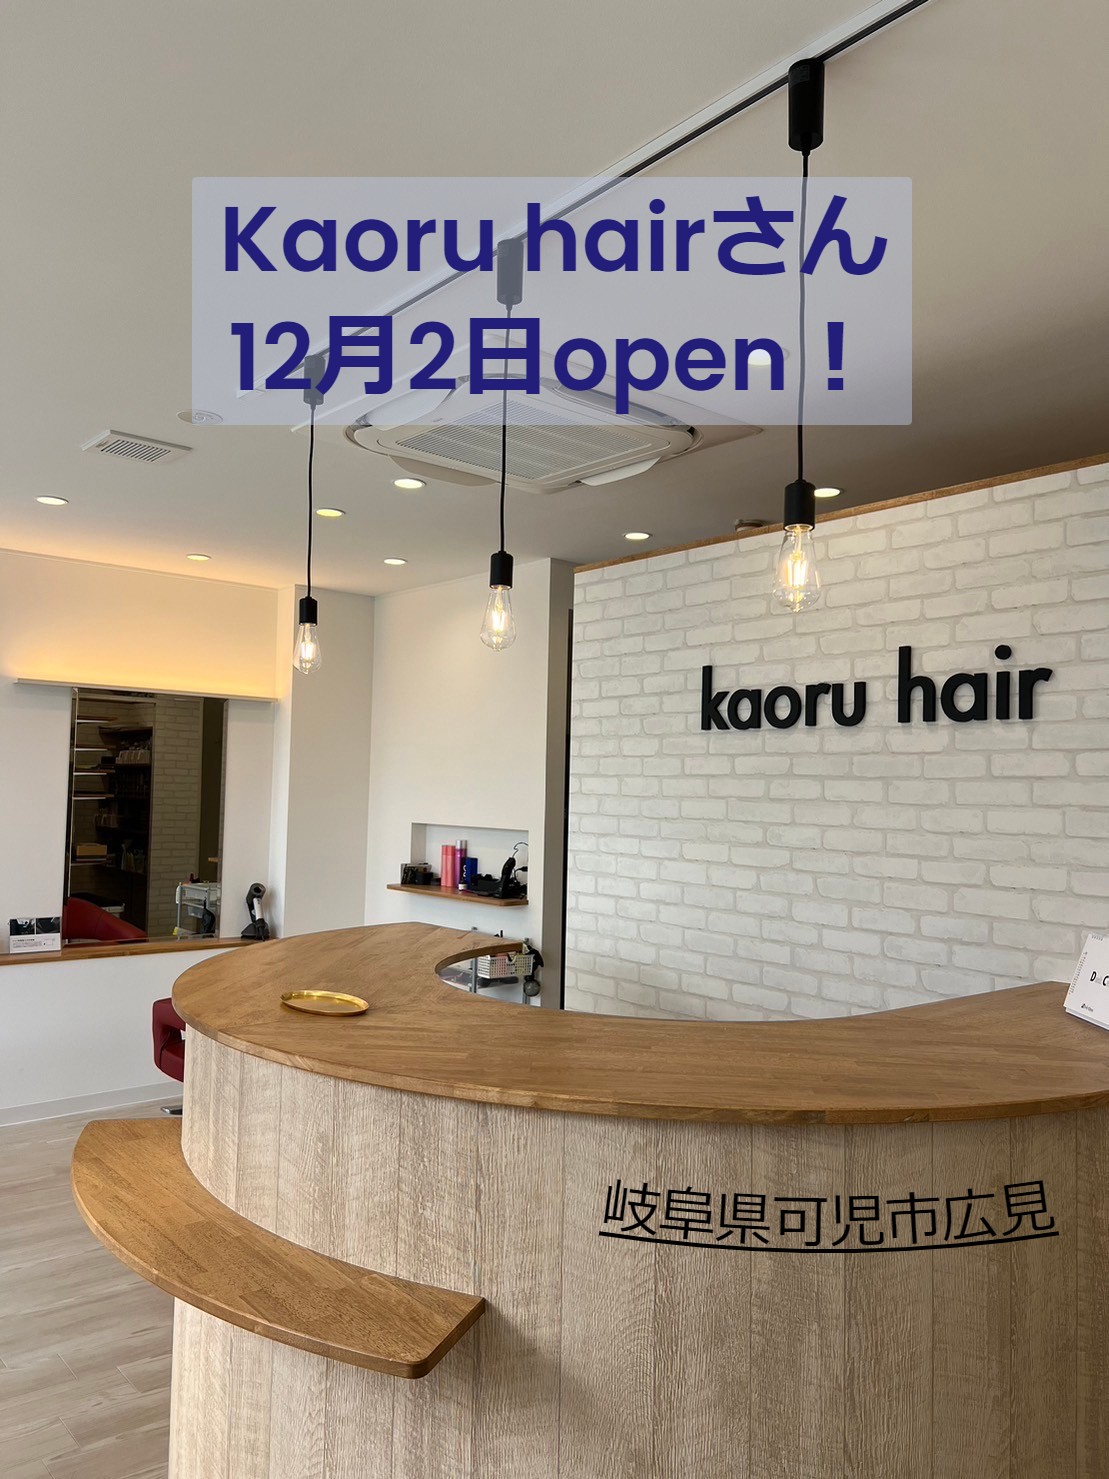 Kaoru hairさん　12月2日openです！